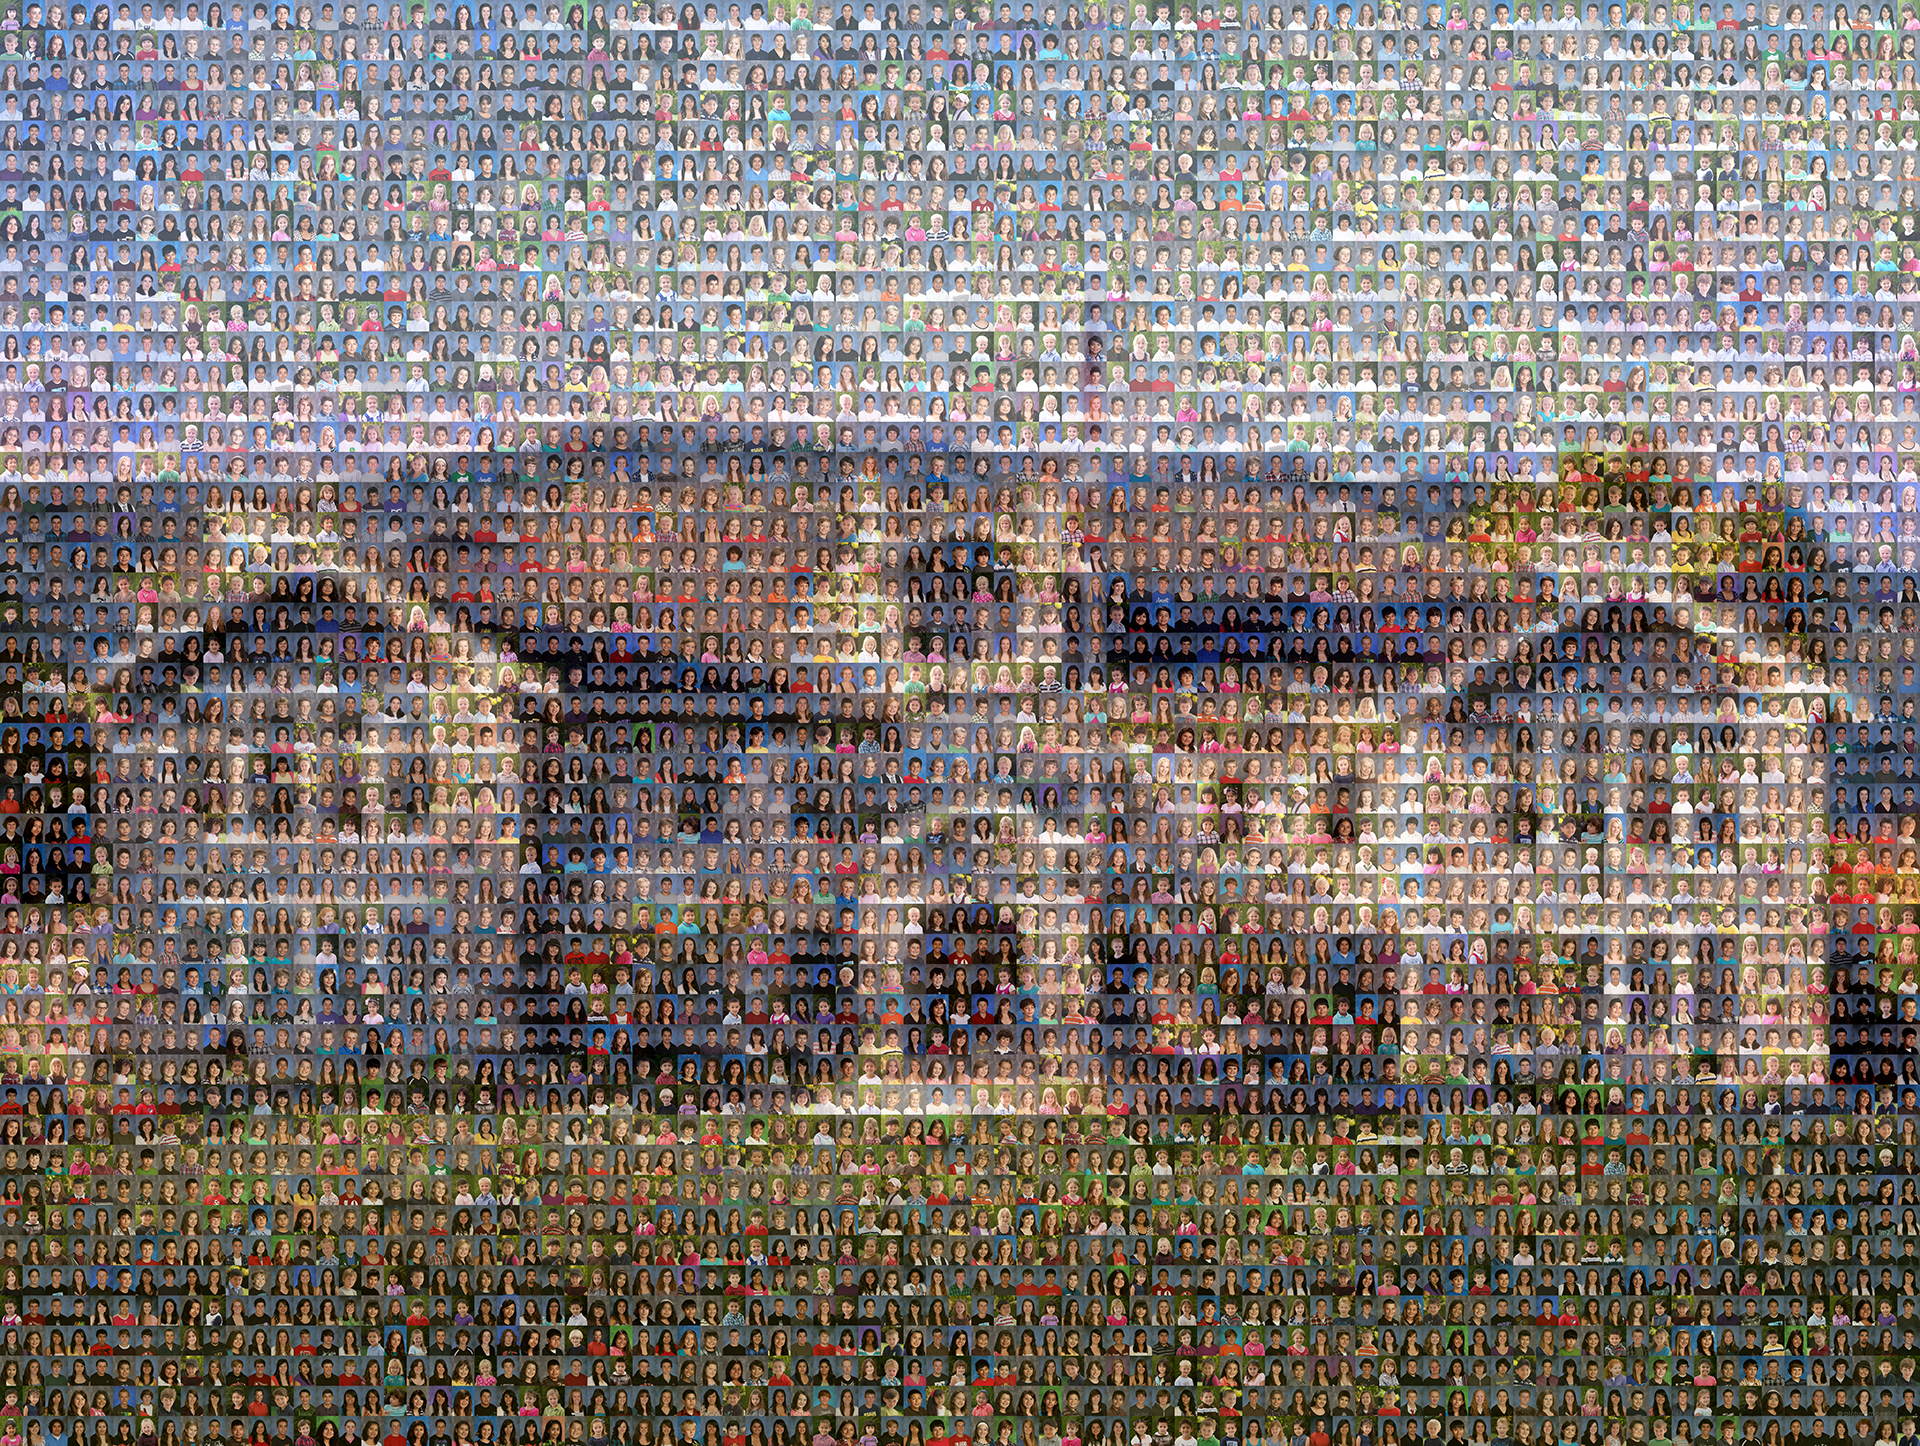 photo mosaic using 909 student photos